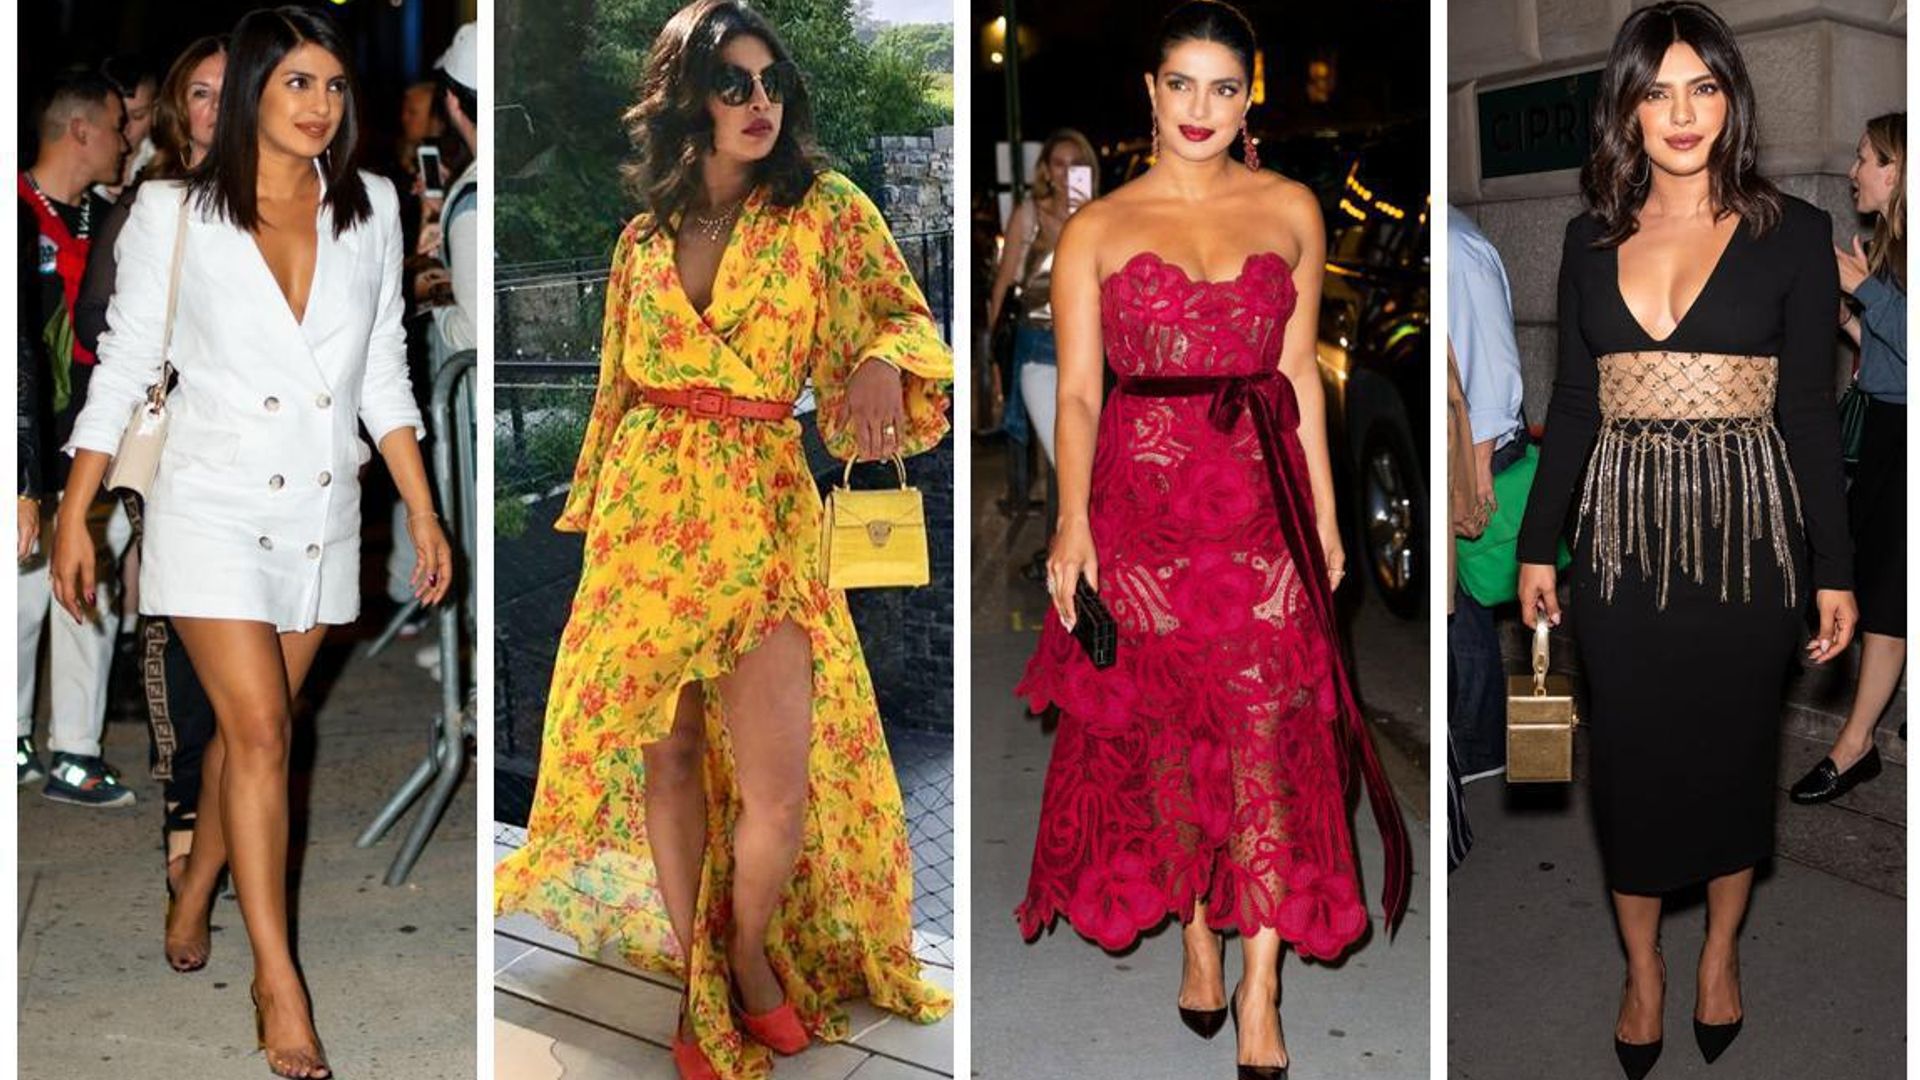 Priyanka Chopra shows her expertise in choosing dresses to create sophisticated and feminine styles